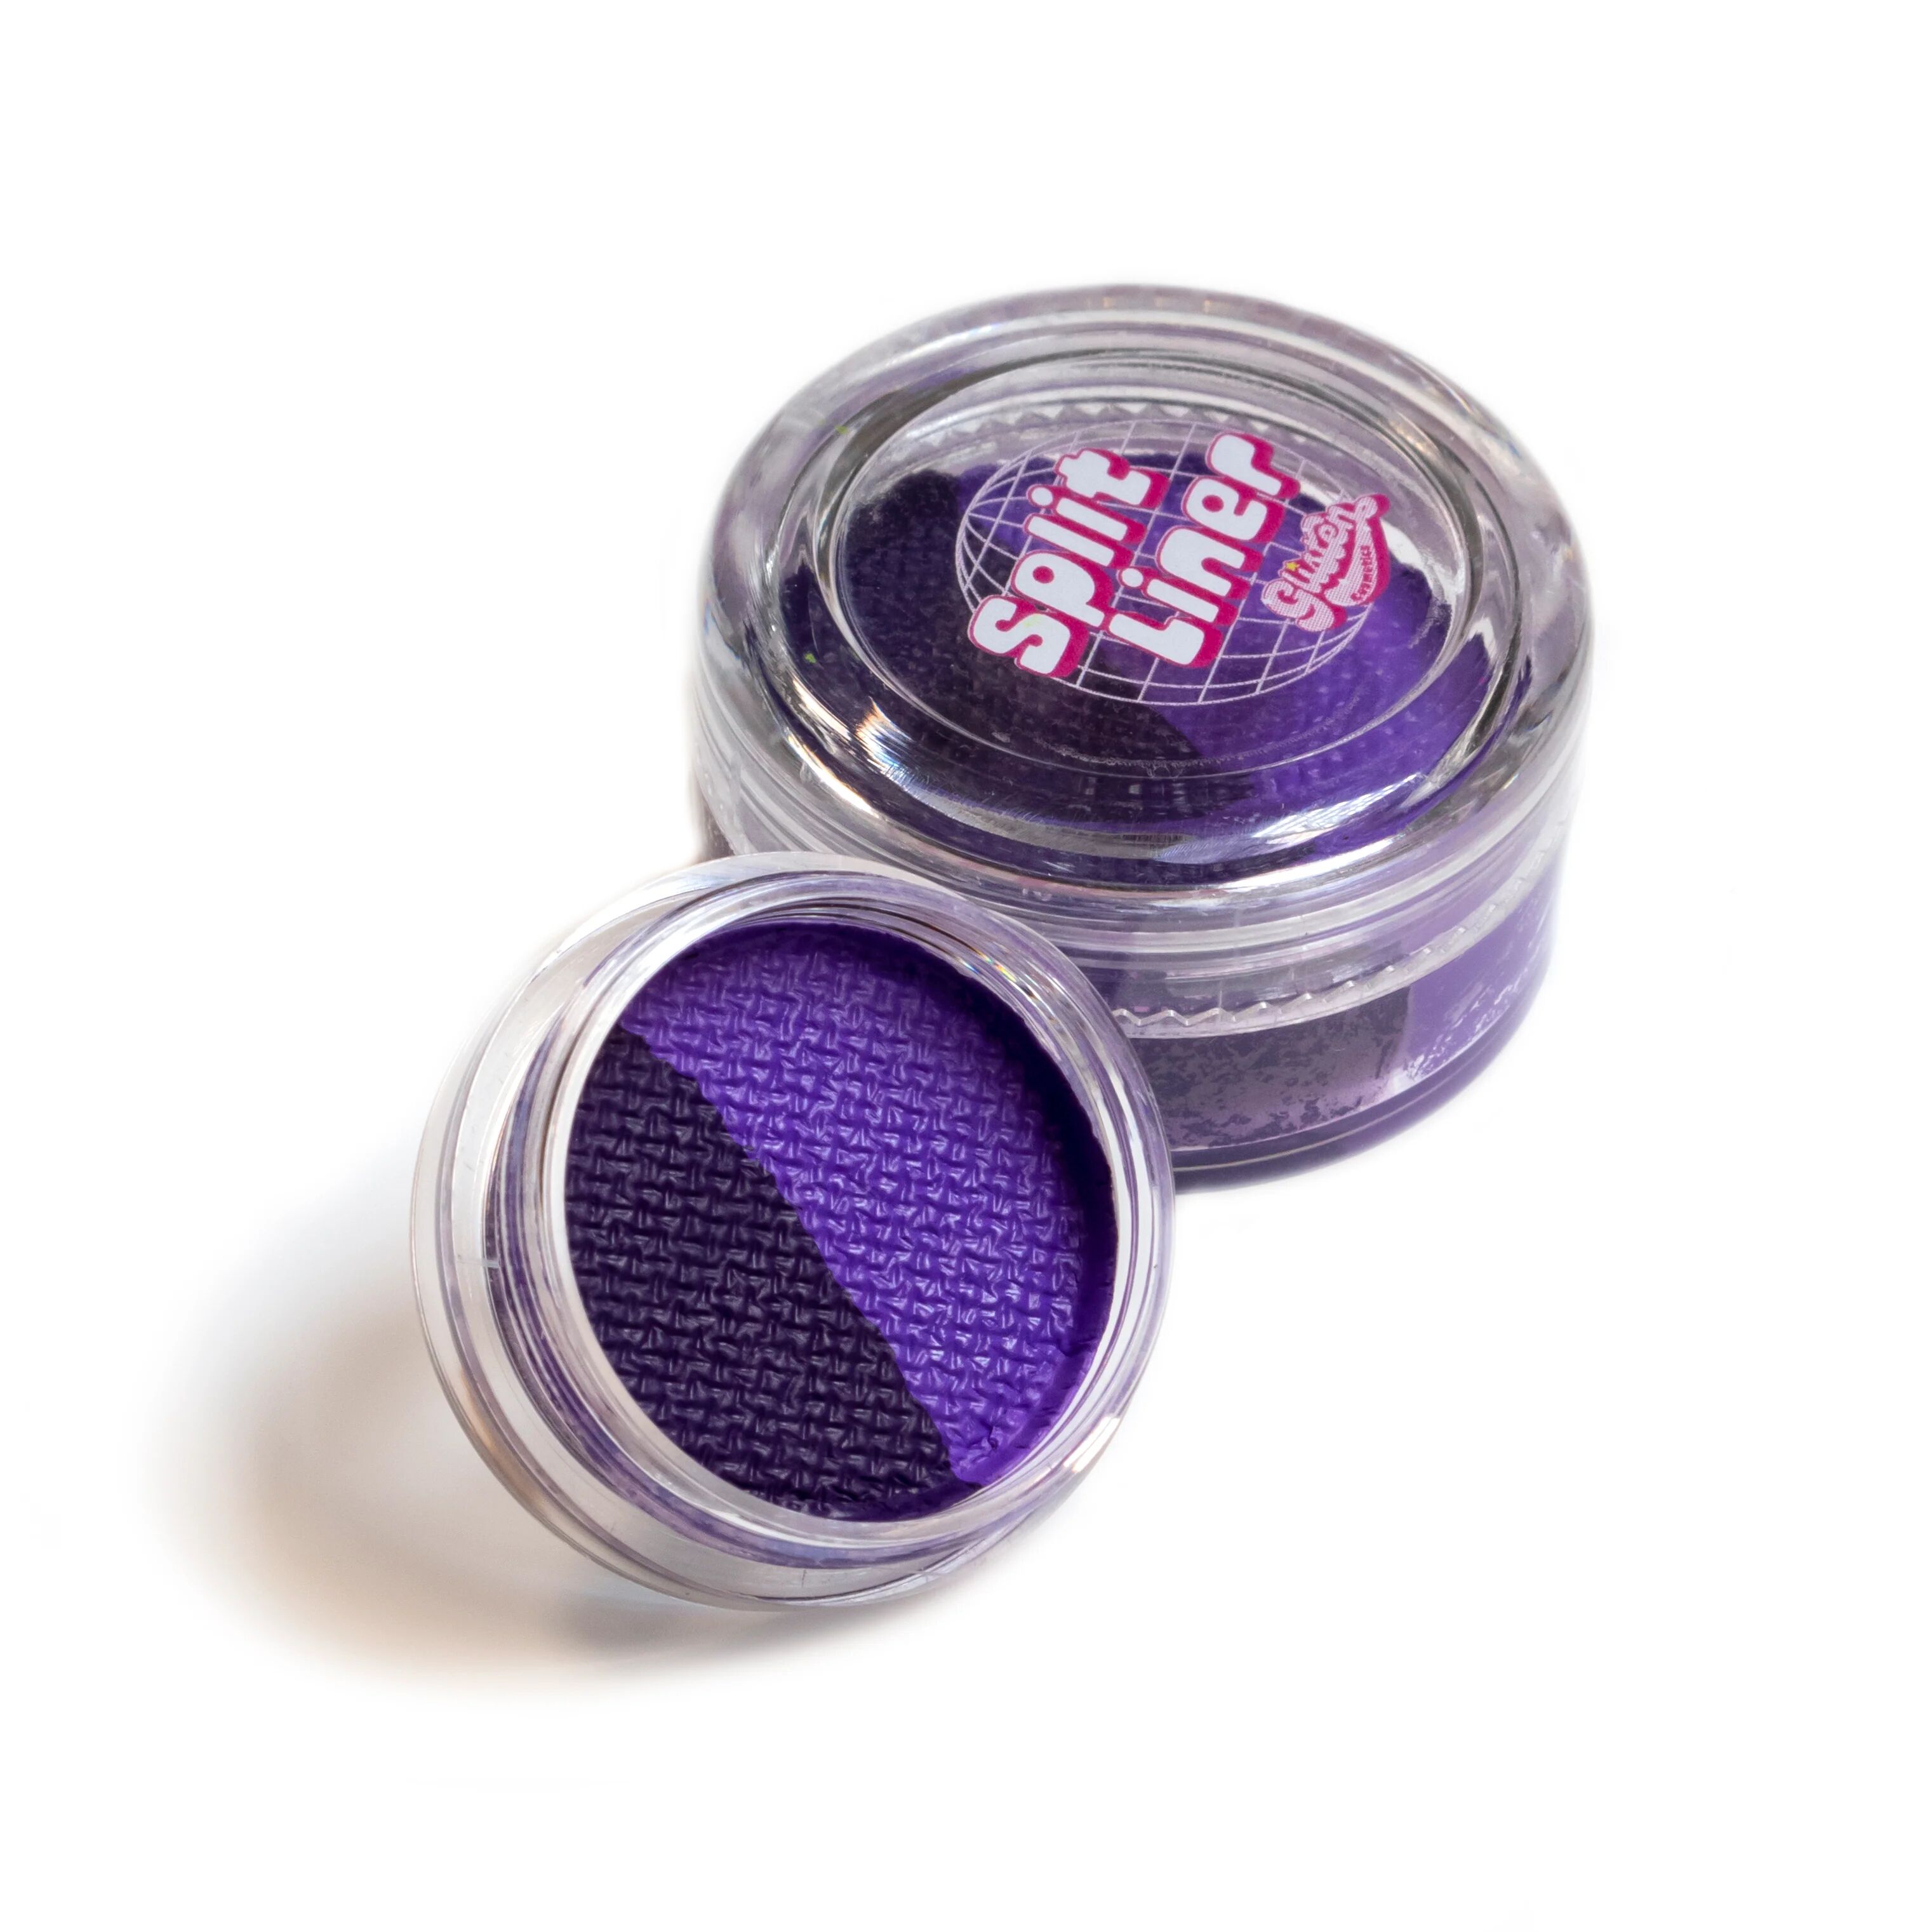 Wine Time (Purple) Split Liner - Eyeliner - Glisten Cosmetics Small - 3g